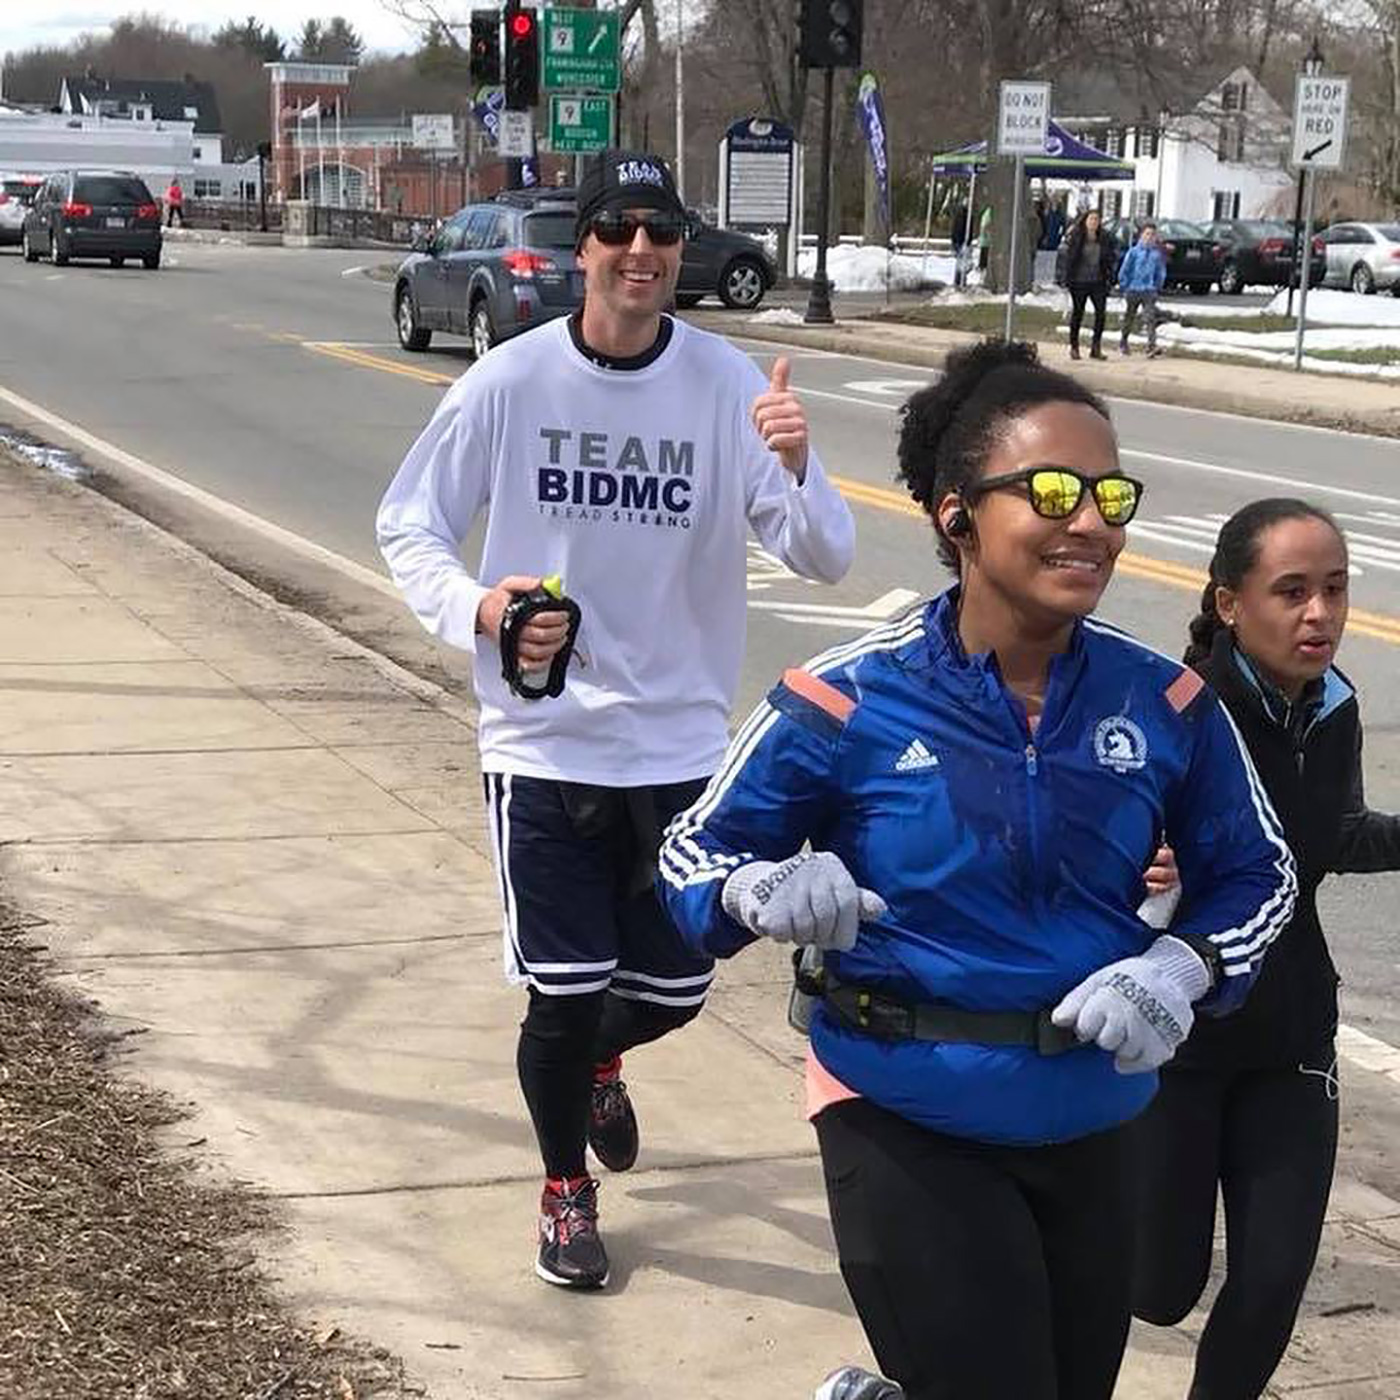 High-end architect running the Boston Marathon